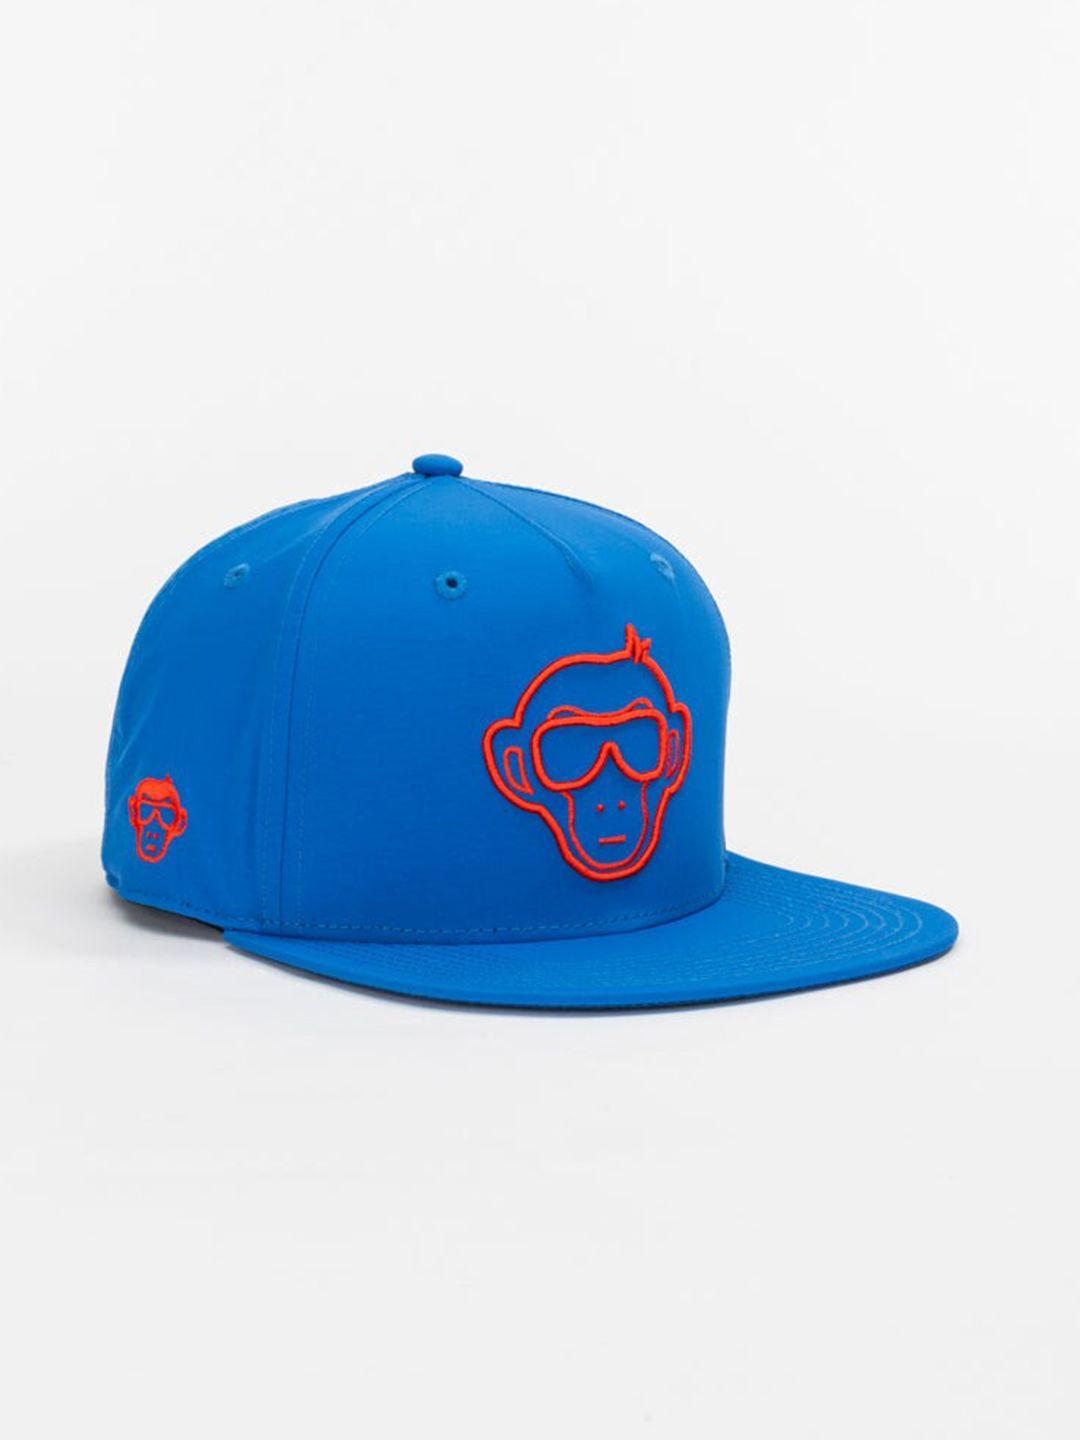 urban monkey unisex embroidered cotton baseball cap